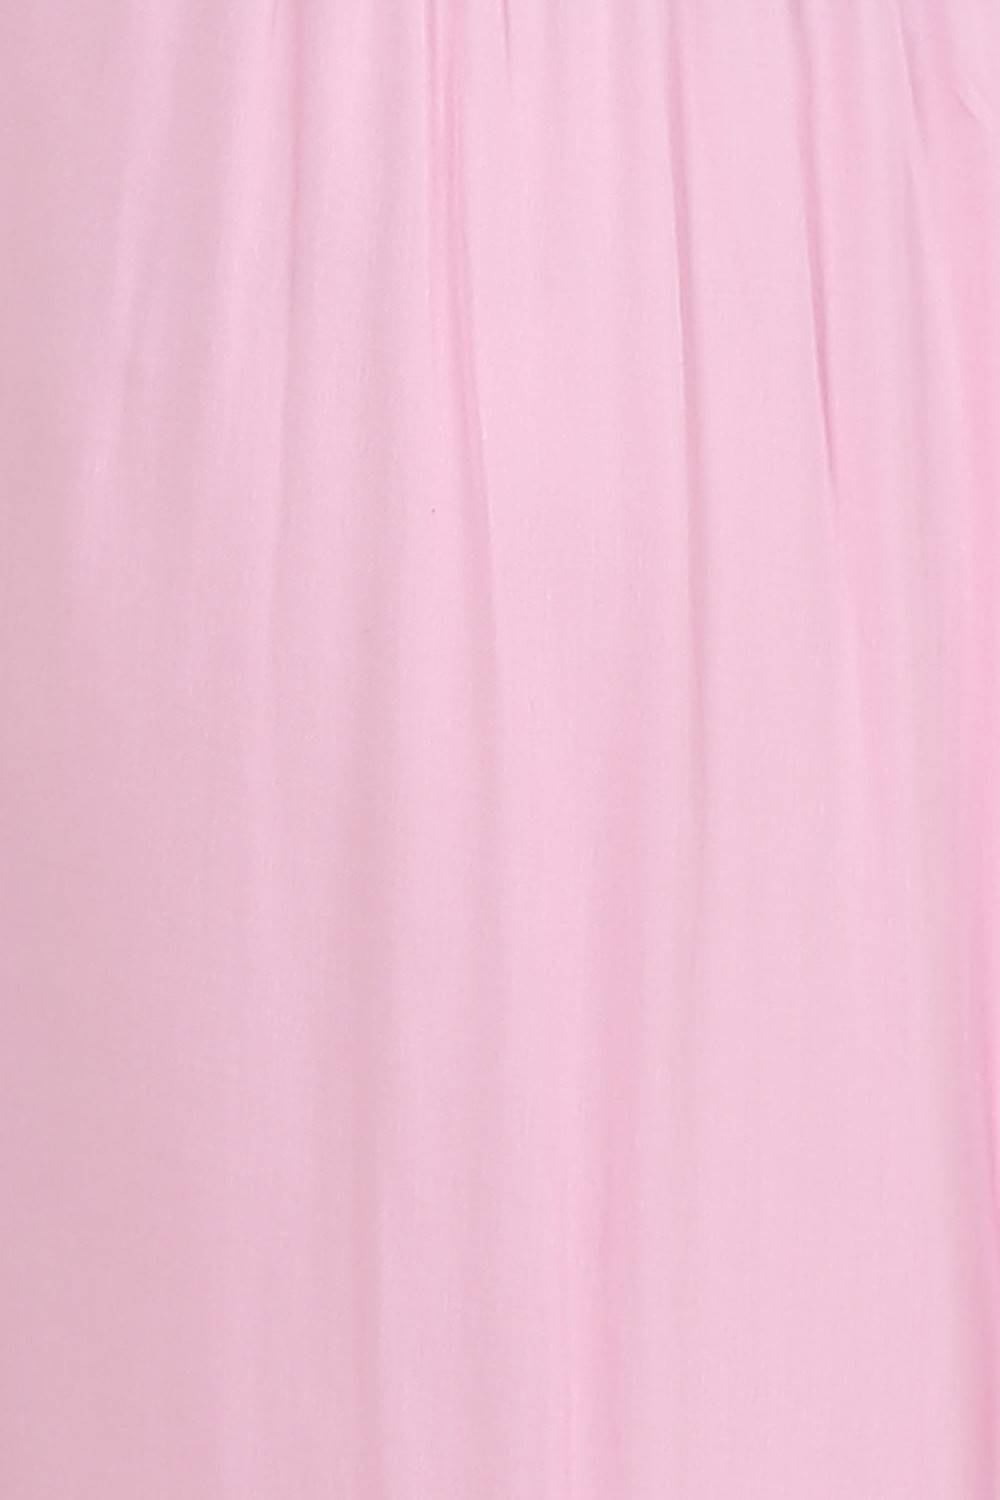 Tone Fuschia Pink and Baby Pink Palazzo Pants